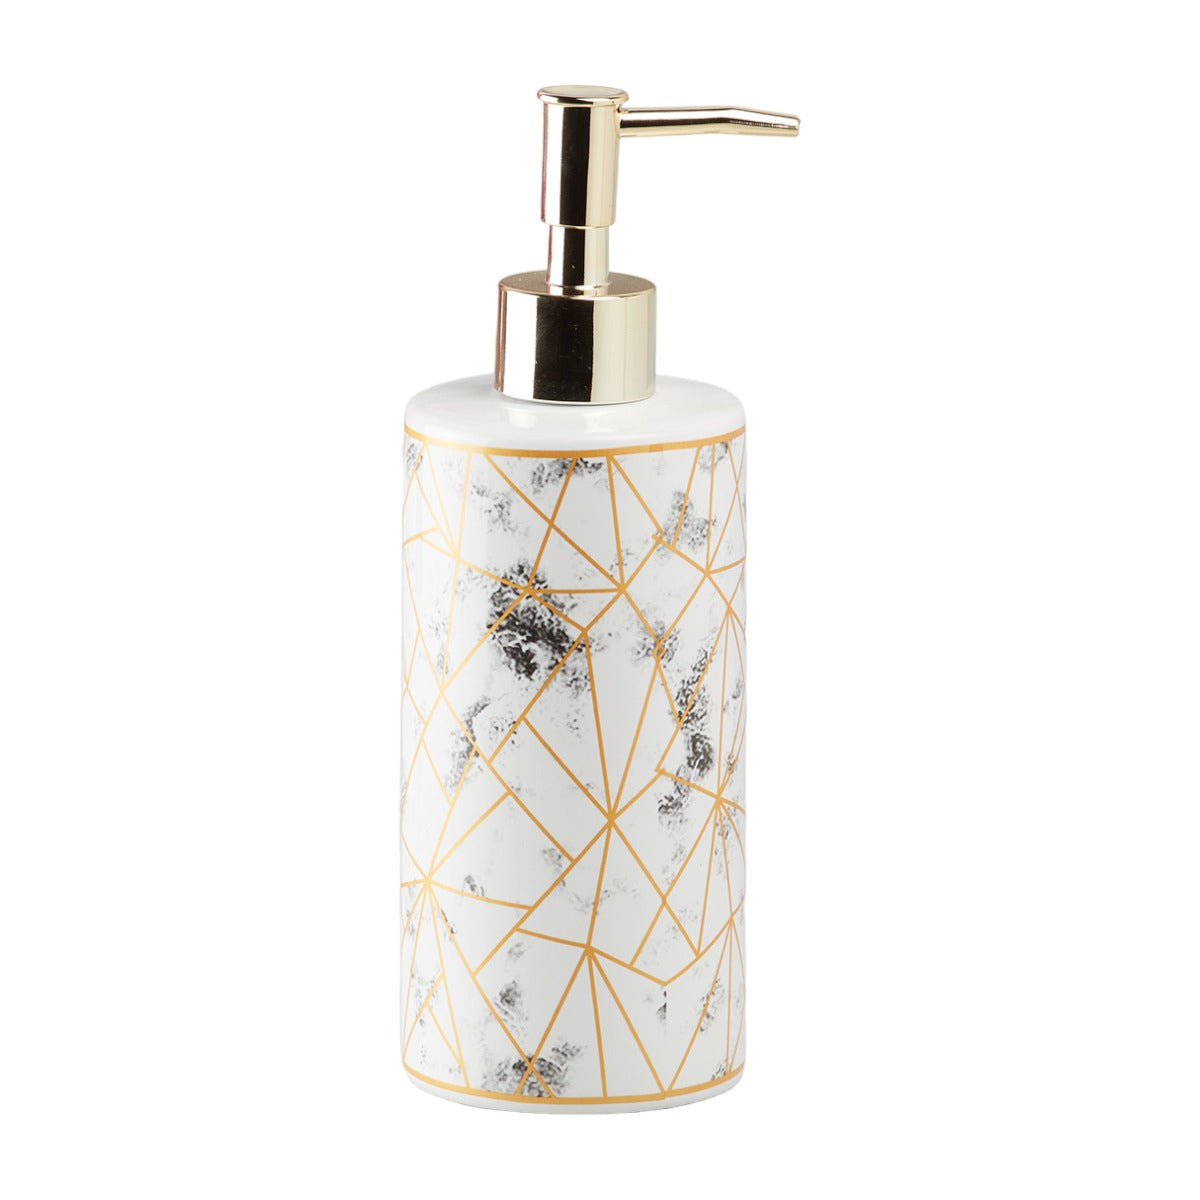 Ceramic Soap Dispenser handwash Pump for Bathroom, Set of 1, White/Gold (10209)